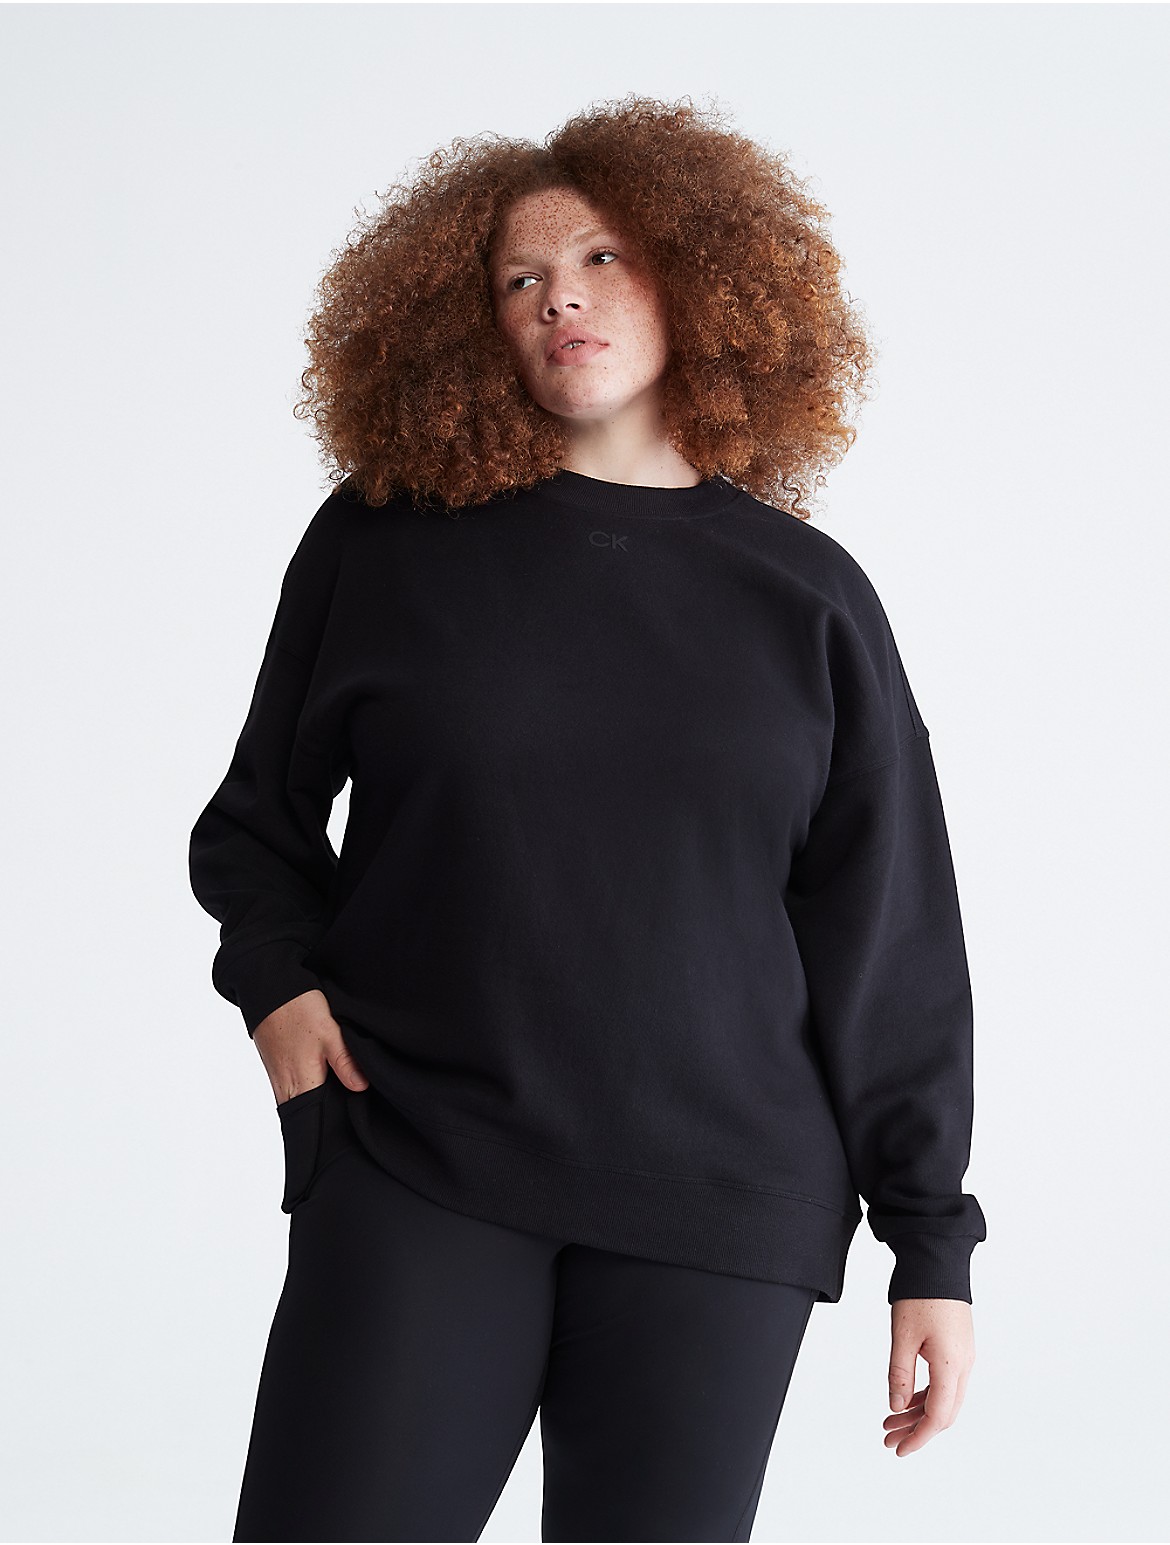 Calvin Klein Women's Plus Size Performance Active Fleece Sweatshirt - Black - 3X